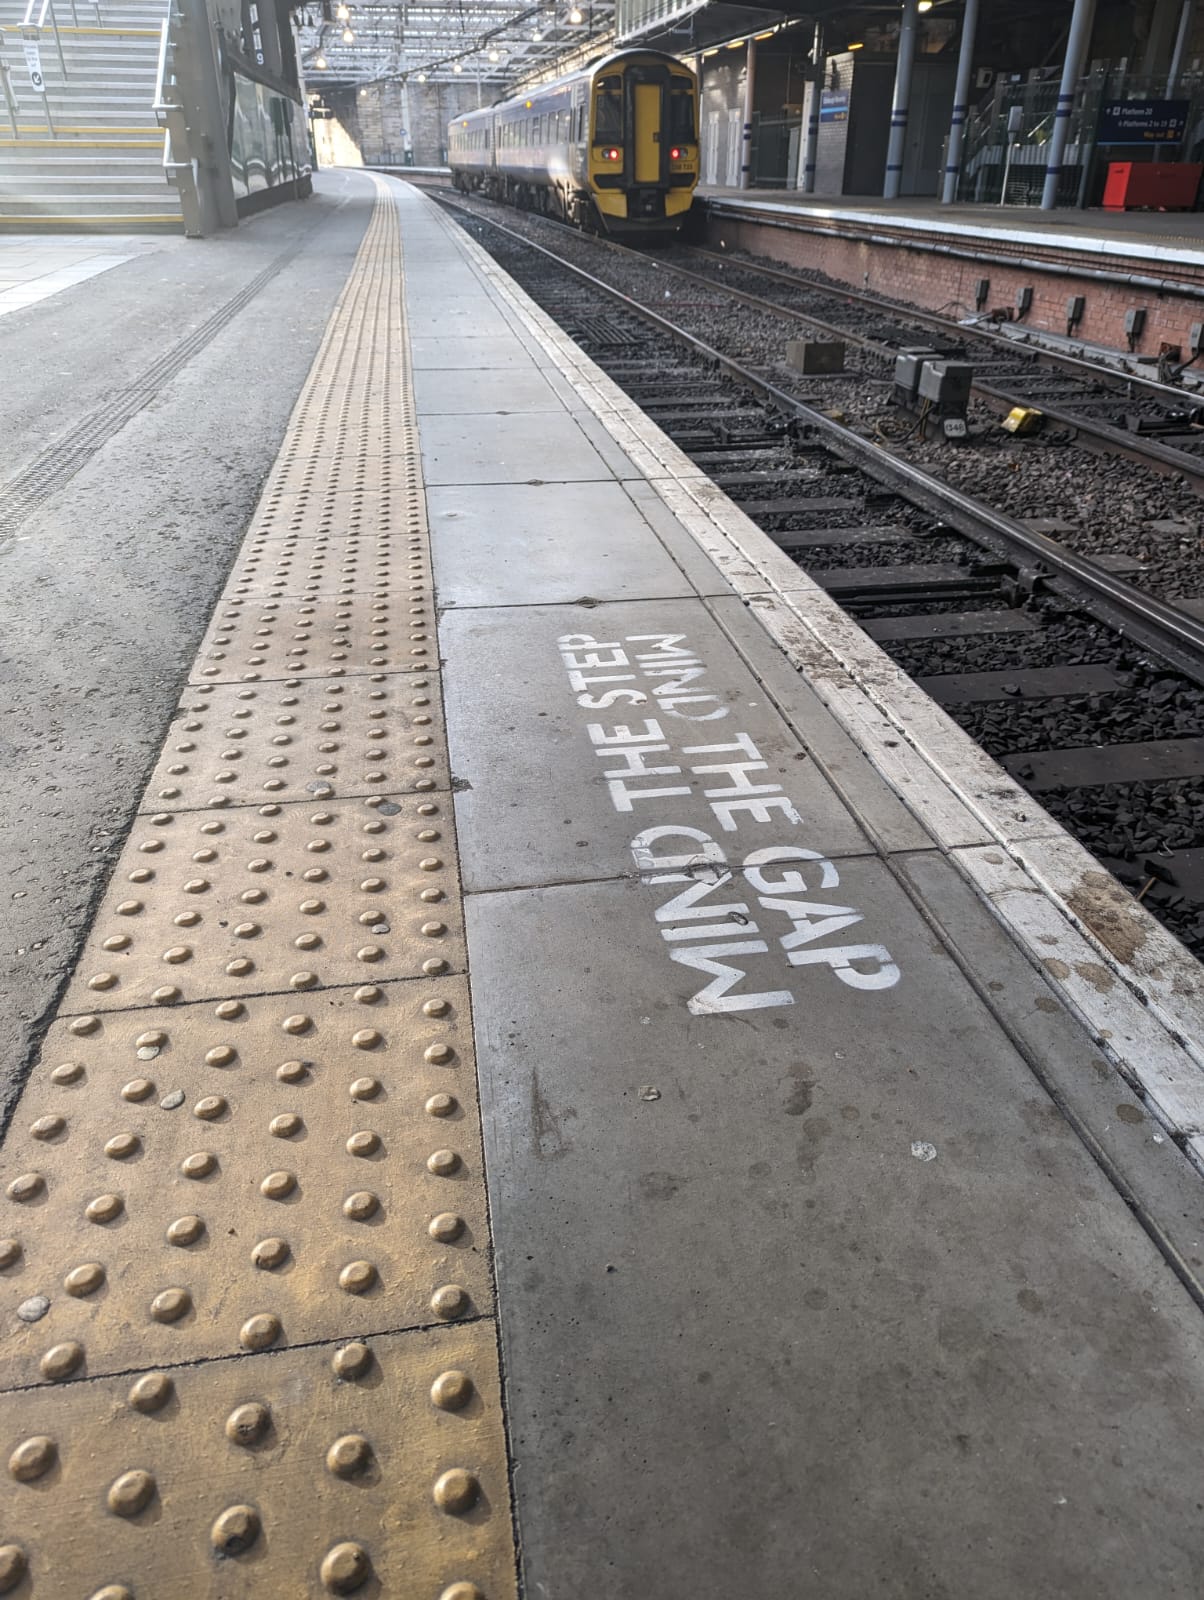 Tactile paving railway station